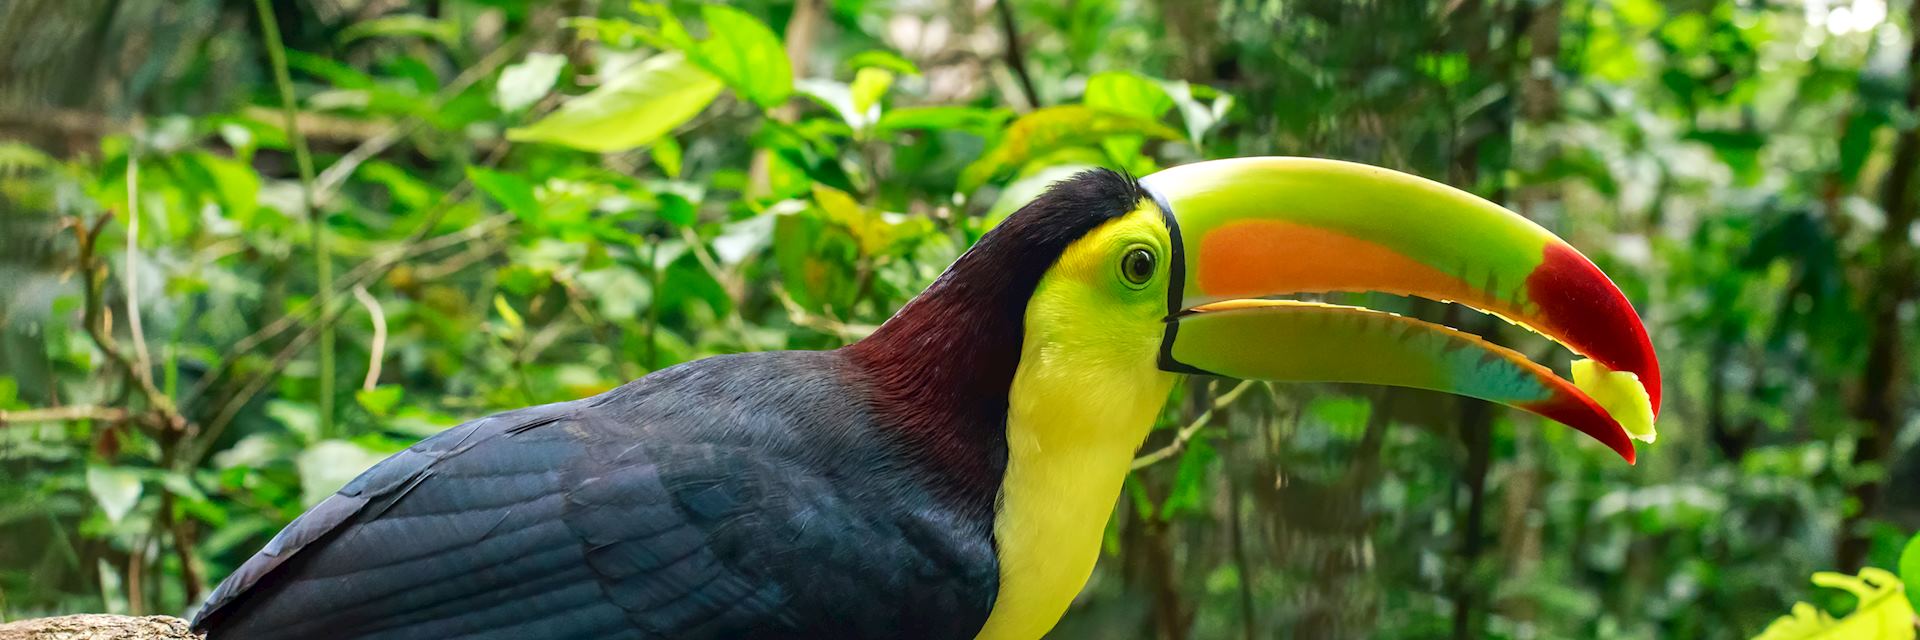 Toucan in Belize jungle